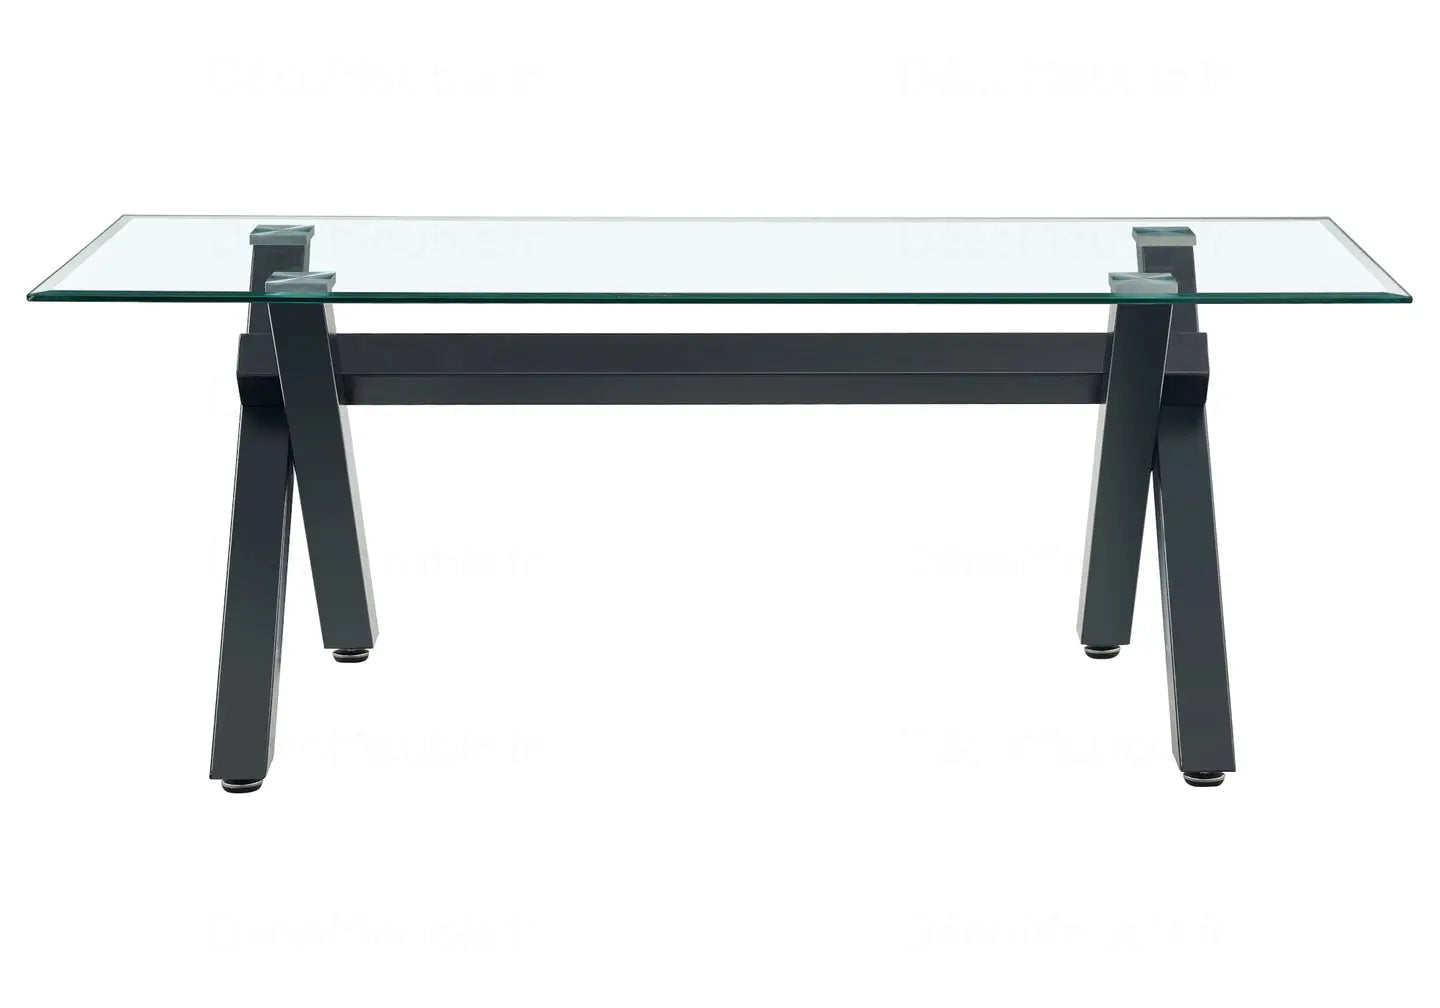 Table basse en verre pied noir CROSS New Design